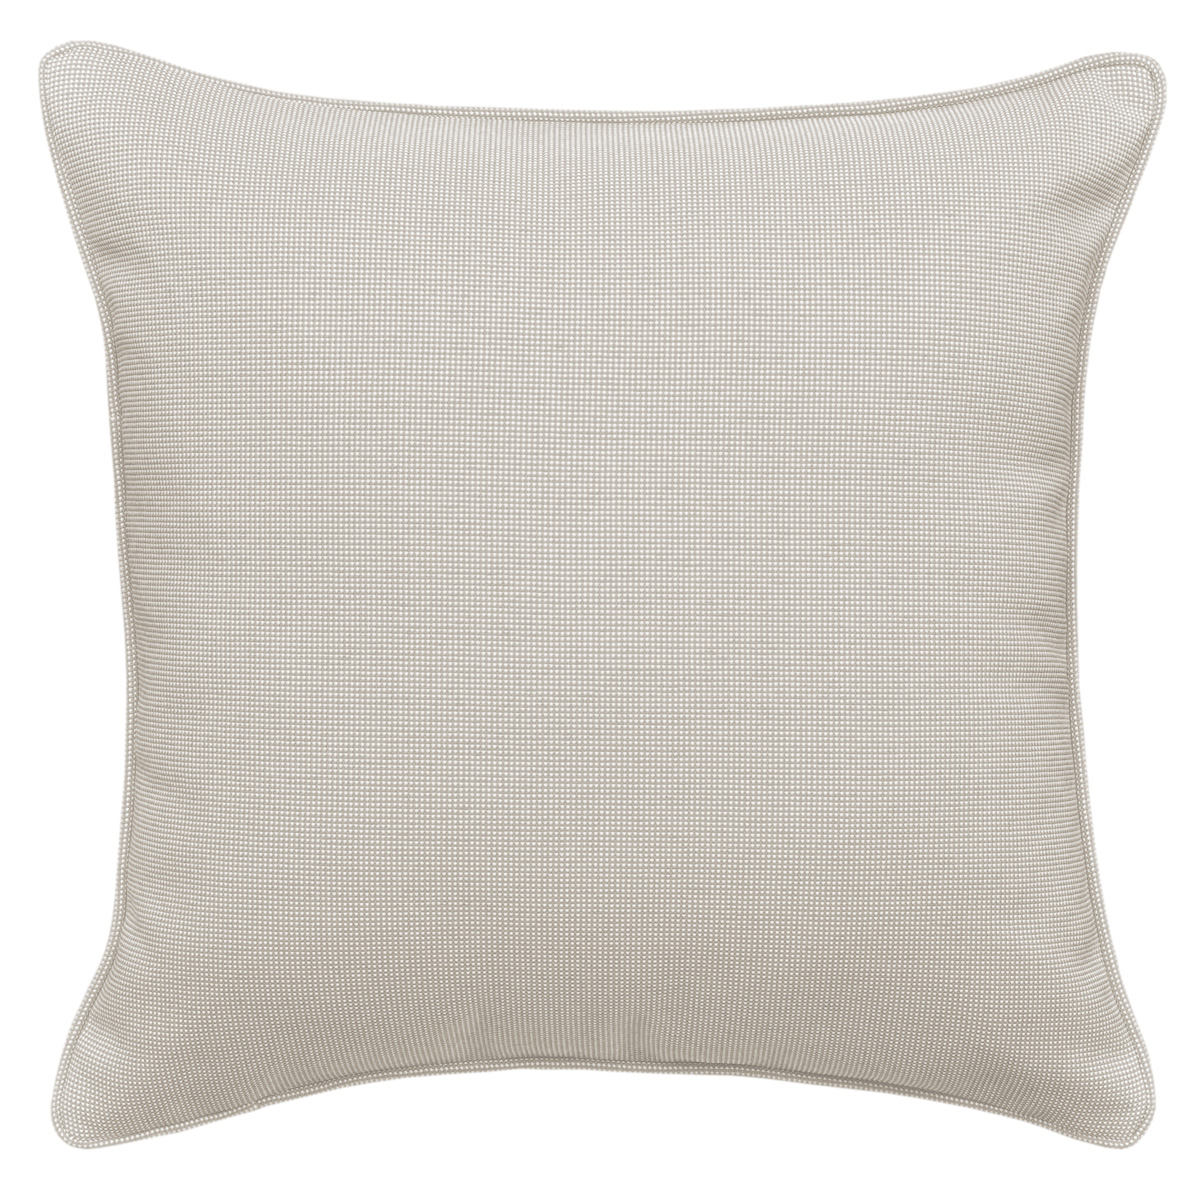 Noosa Natural Outdoor Cushion - 45x45cm